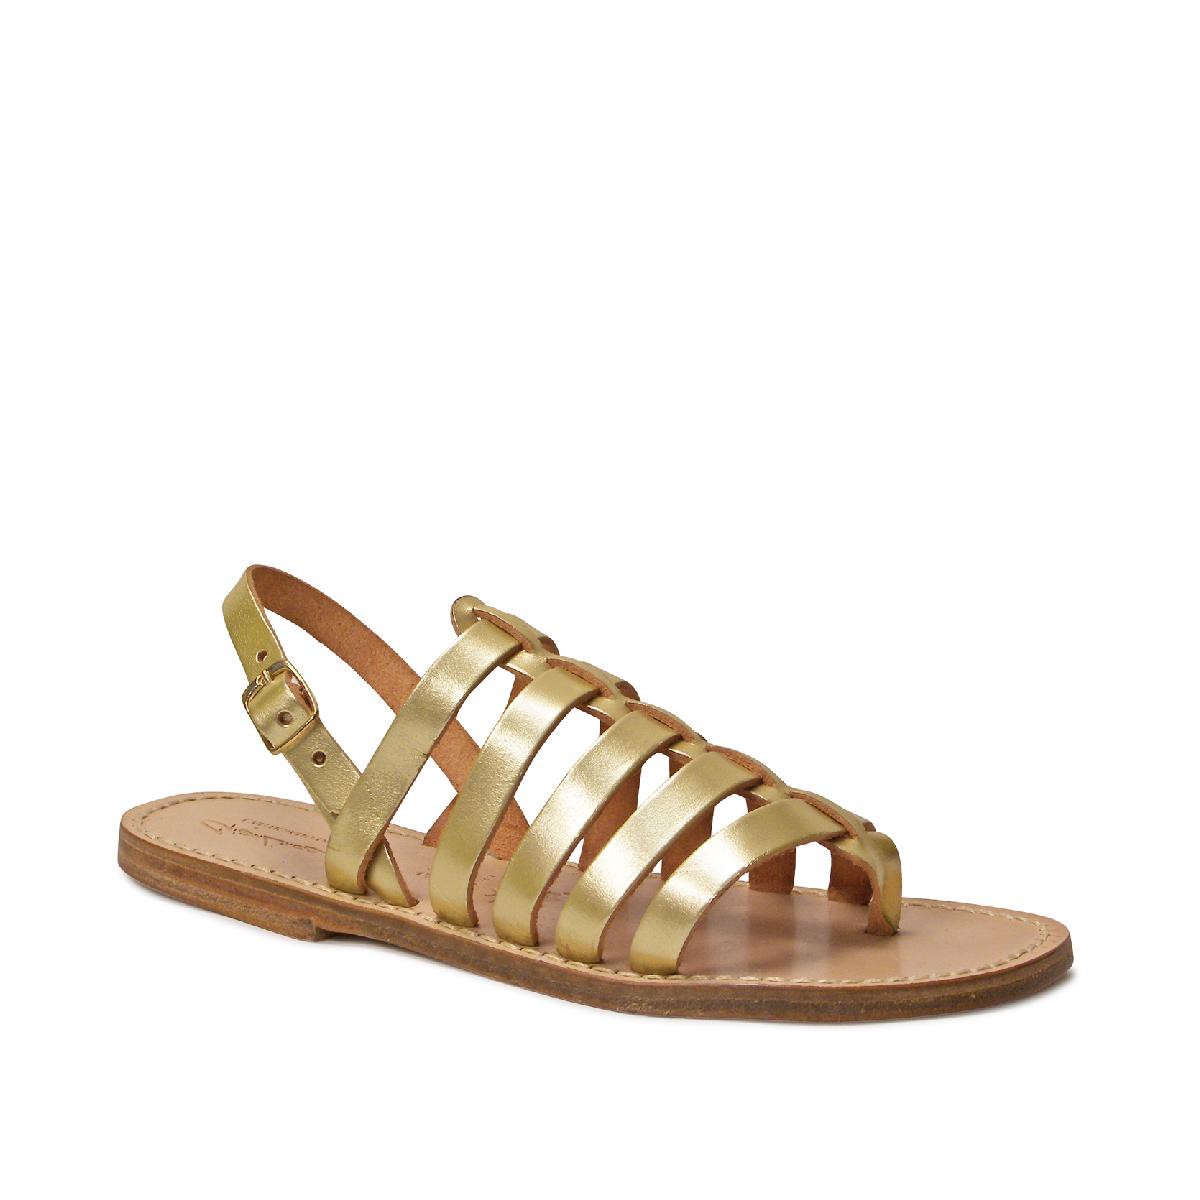 gold flat slip on sandals